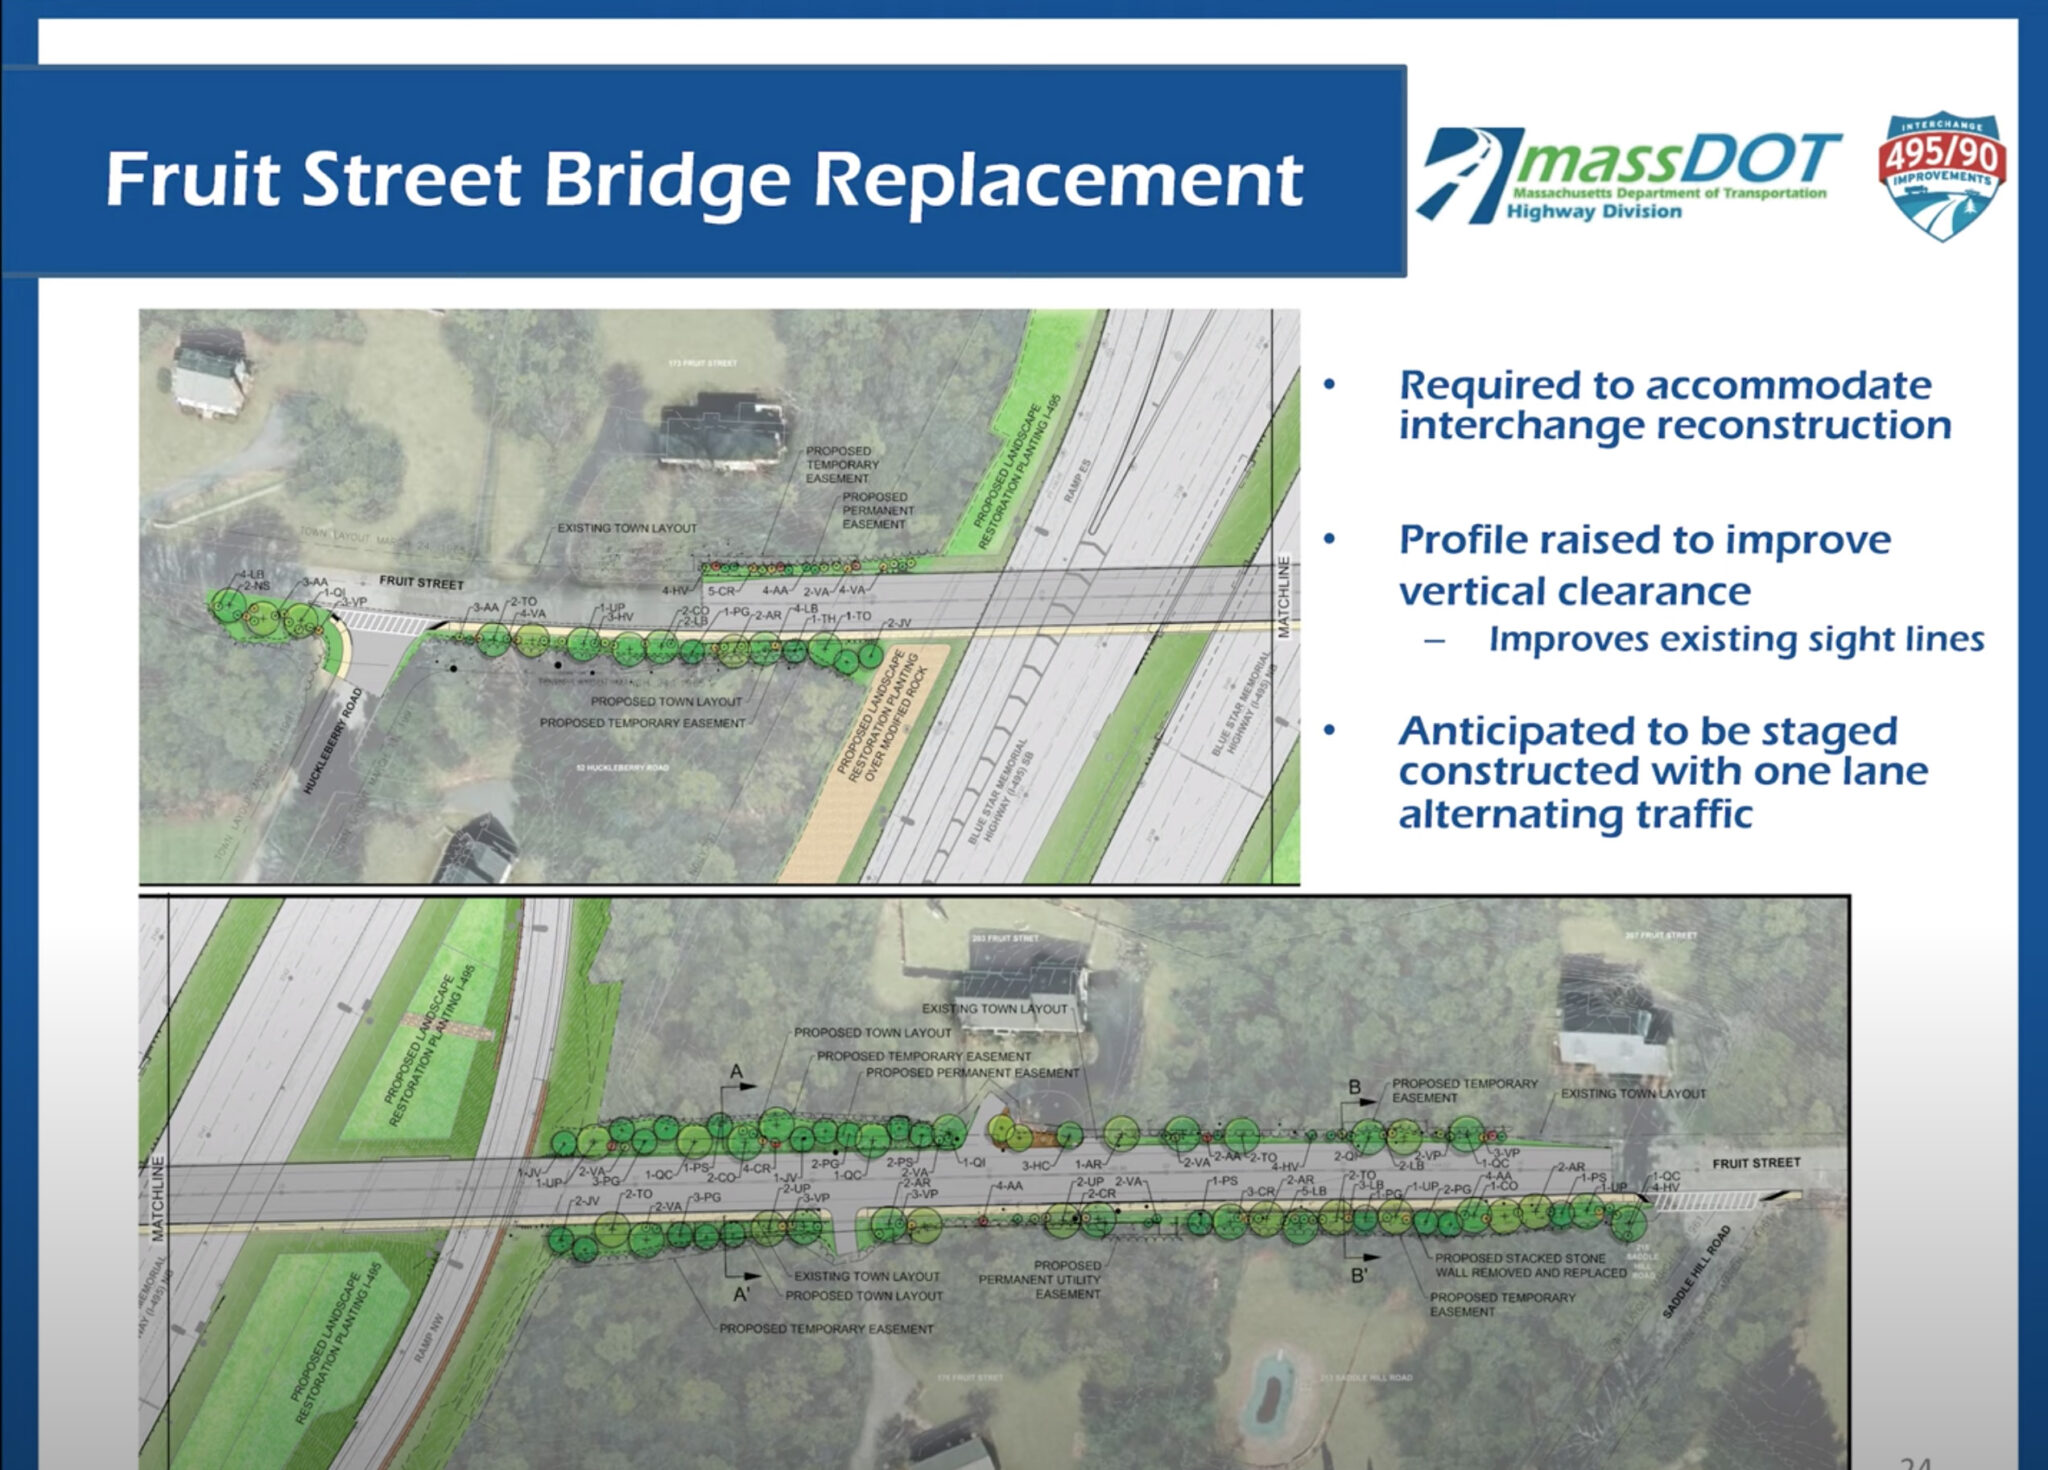 Full closure of Fruit Street bridge starts Feb. 7, will last about 1 year